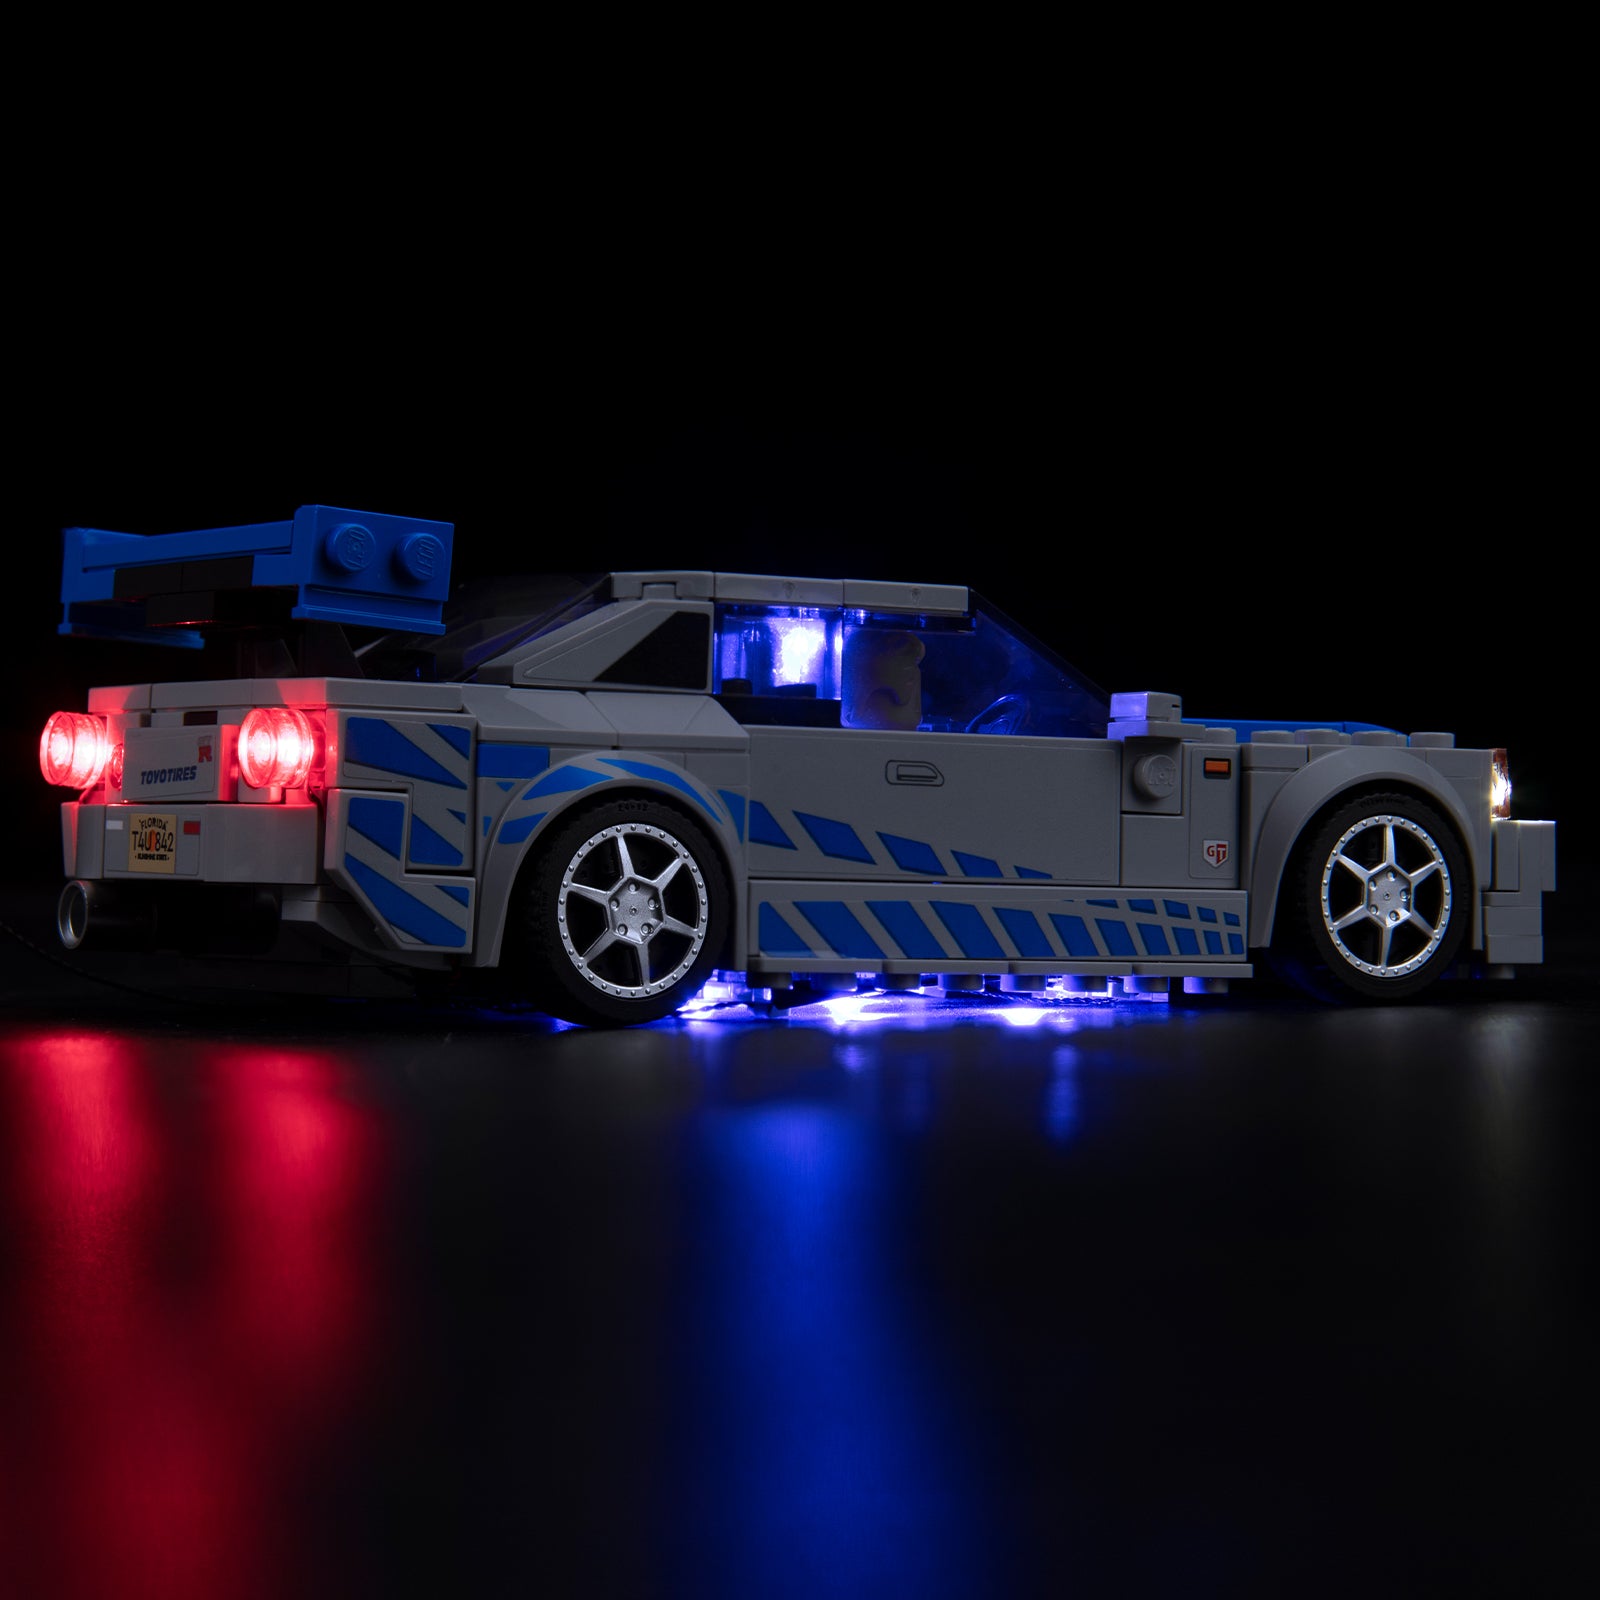 Lego Speed Champions Nissan Skyline Gt-r R34 2 Fast 2 Furious - 76917